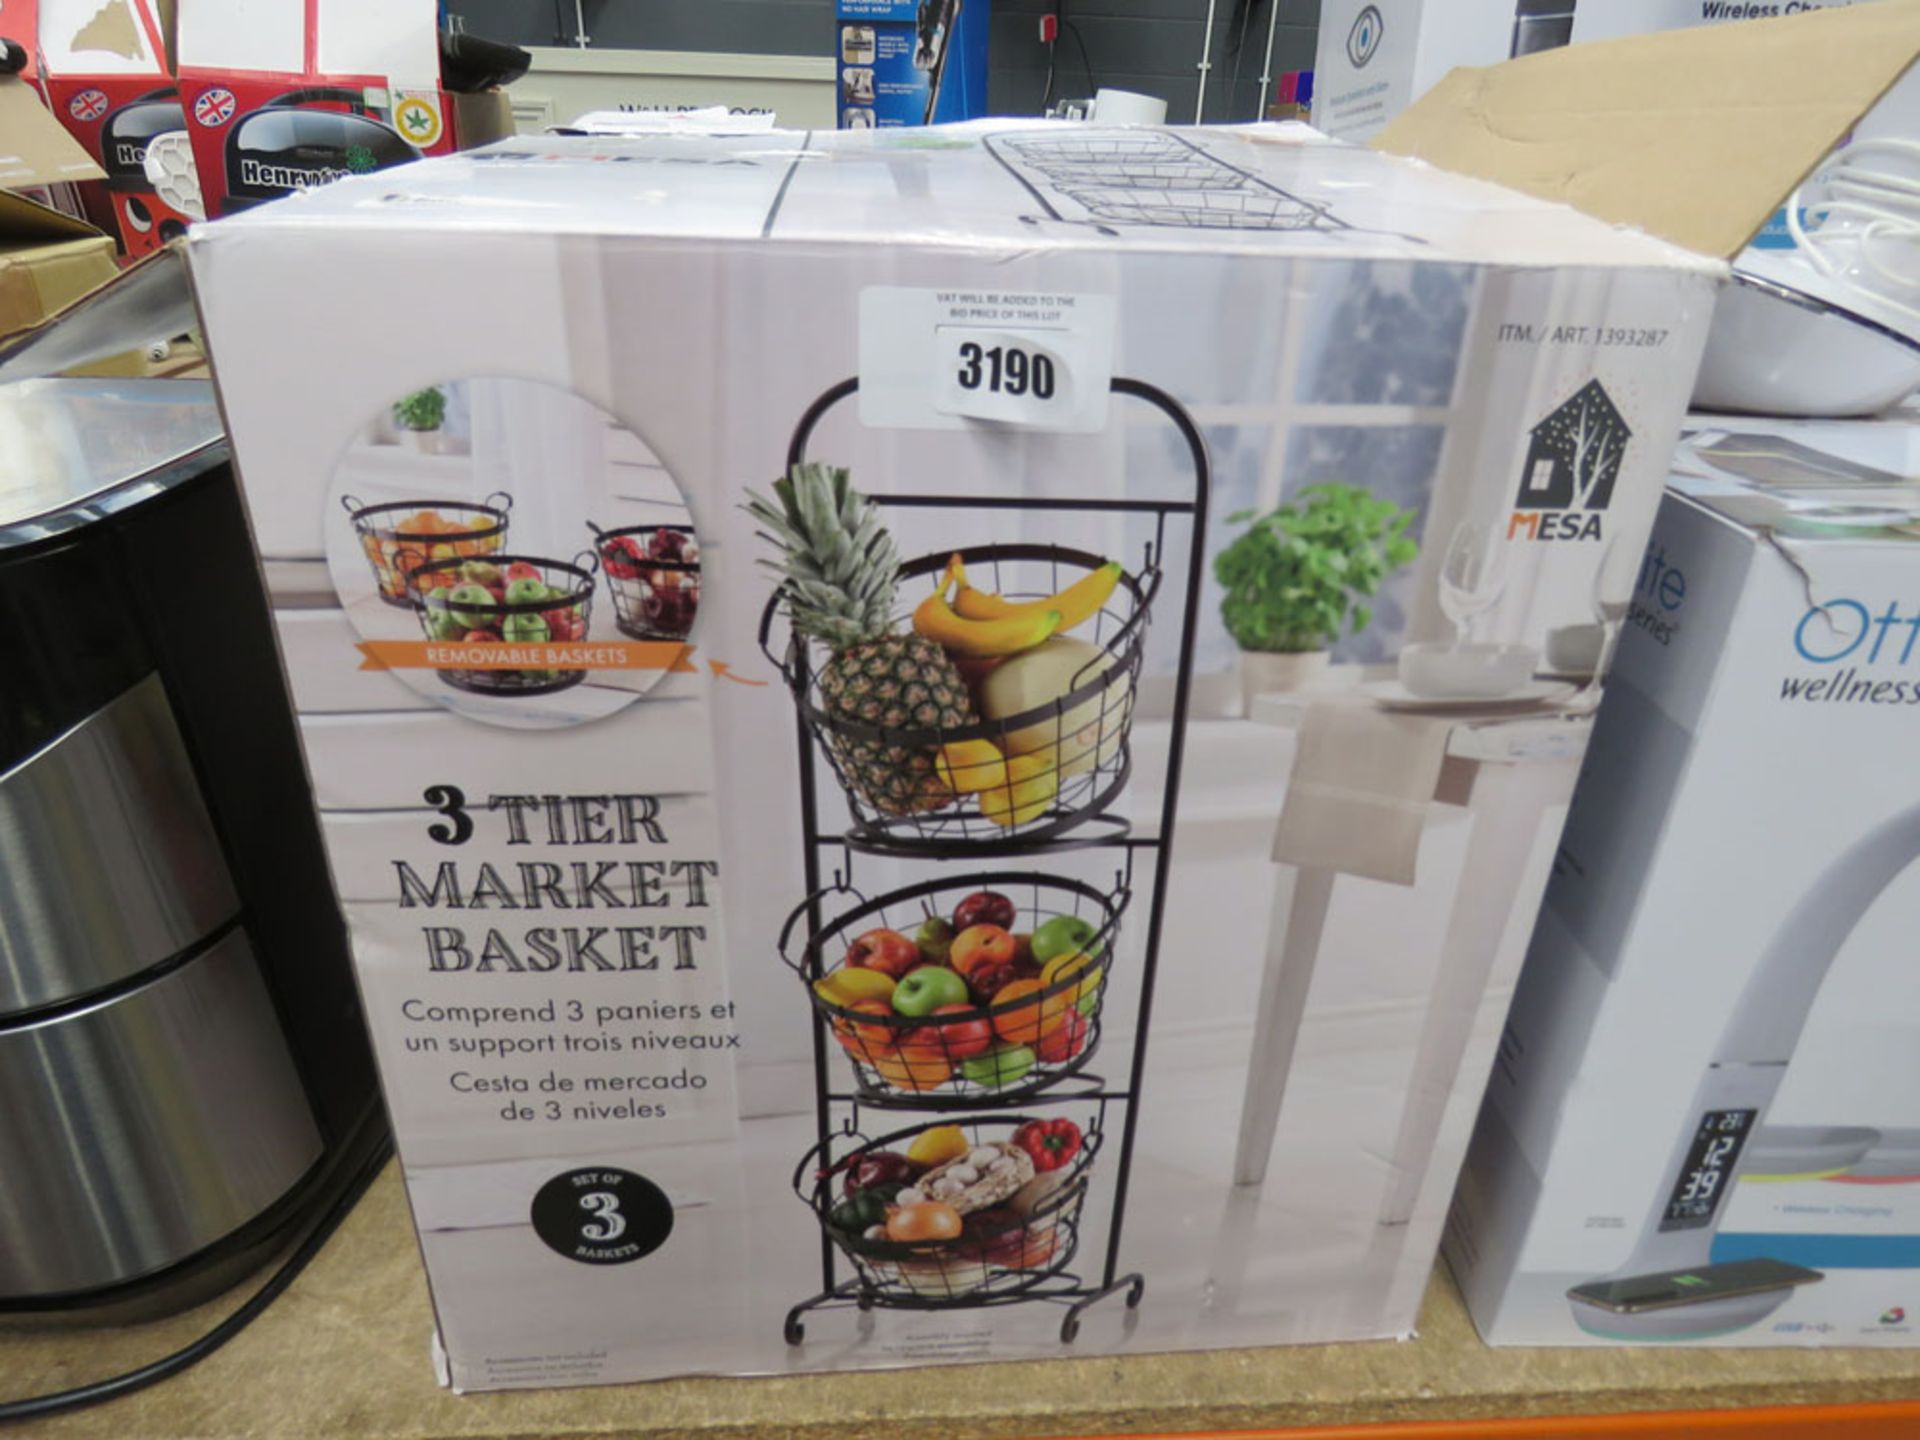 3201 - 3 tier market basket stand - Image 2 of 2